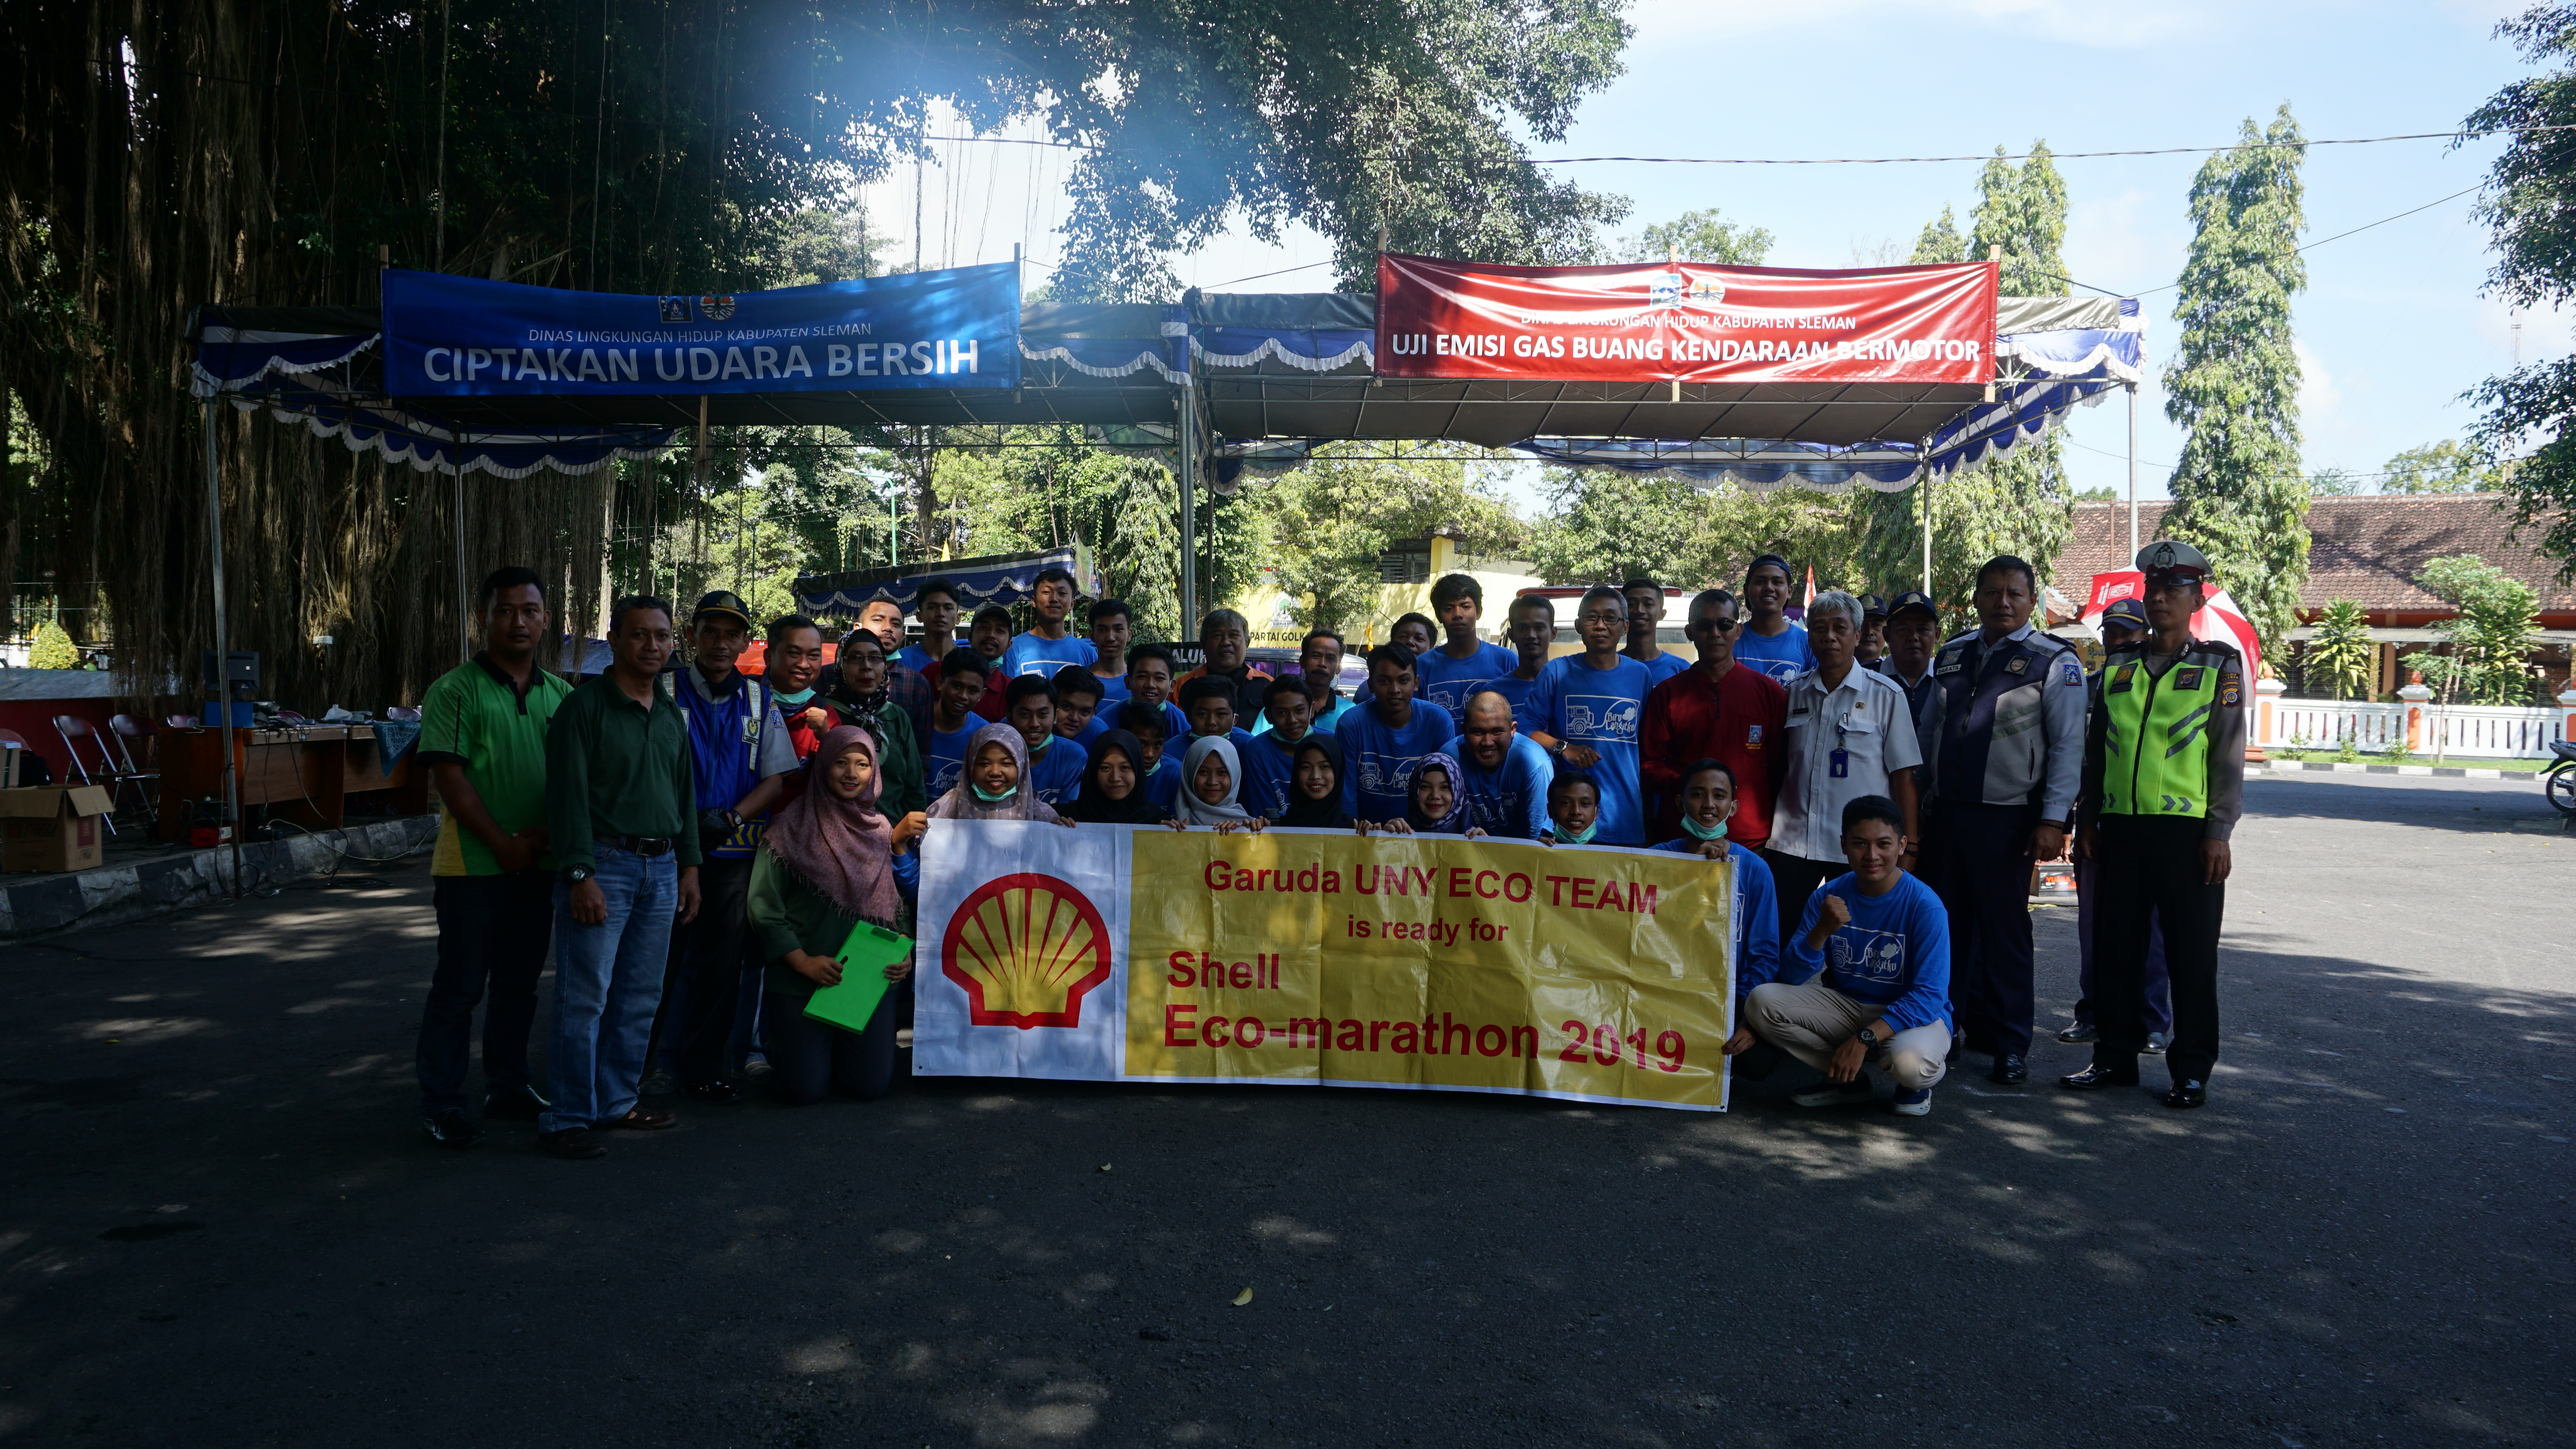 Foto  Kontes Mobil Hemat Energi “Shell Eco Marathon (SEM) Asia 2018